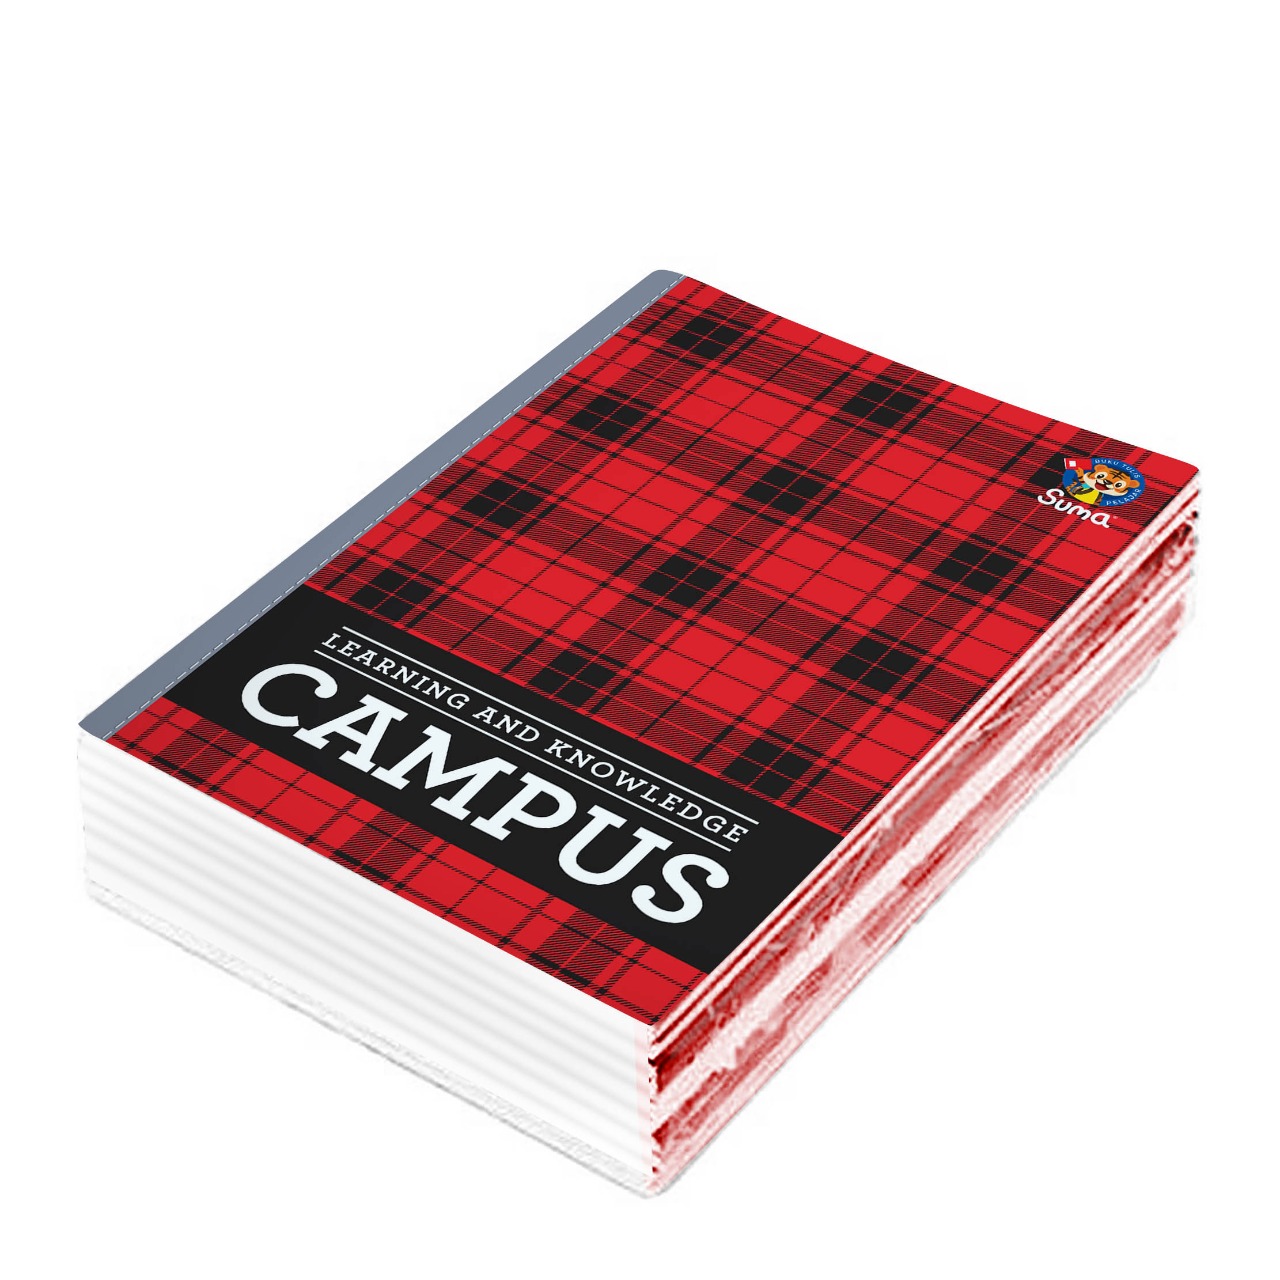 Jual Kebutuhan Sekolah Buku  Tulis  Suma Campus Kotak Merah 